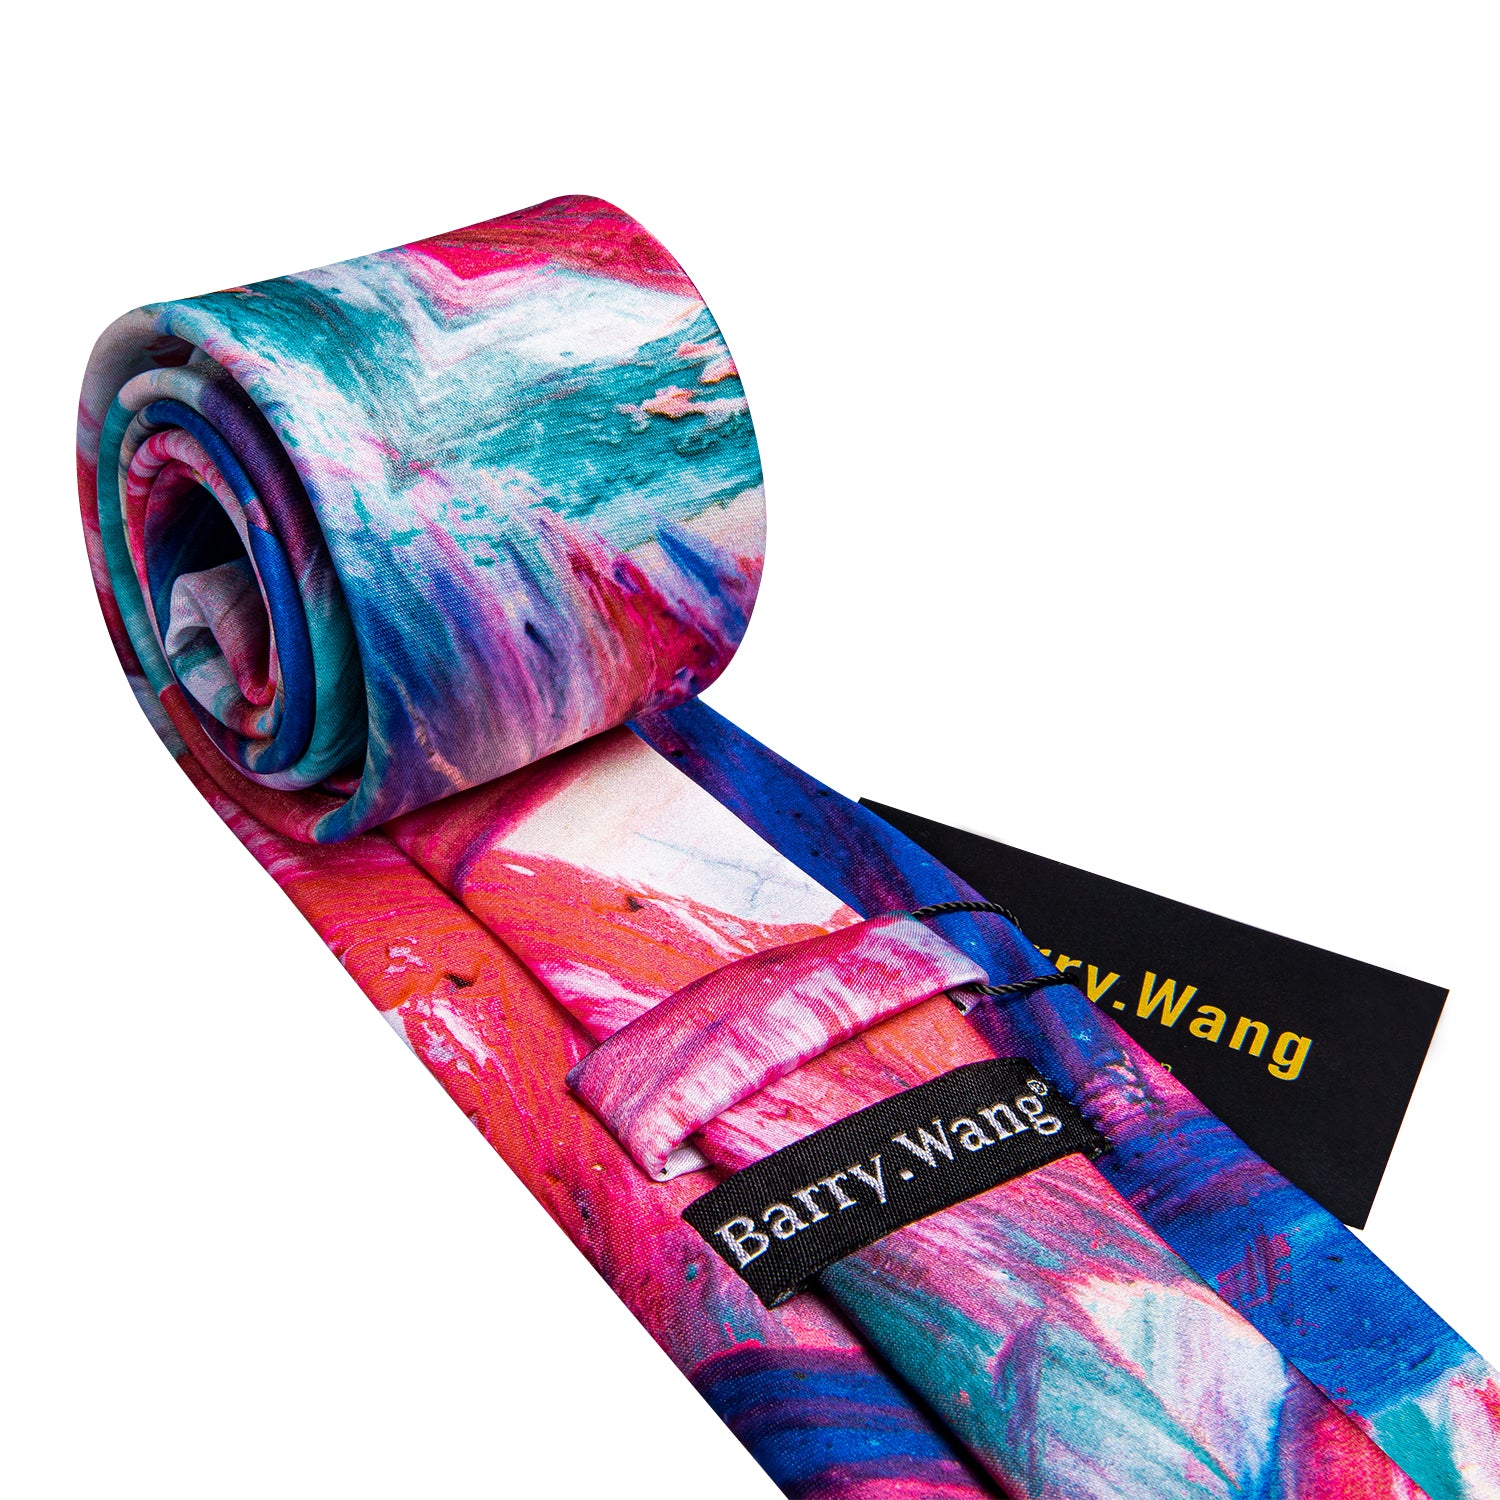 Barry Wang Red Yellow Teal Novelty Print Silk Tie Hanky Cufflinks Set